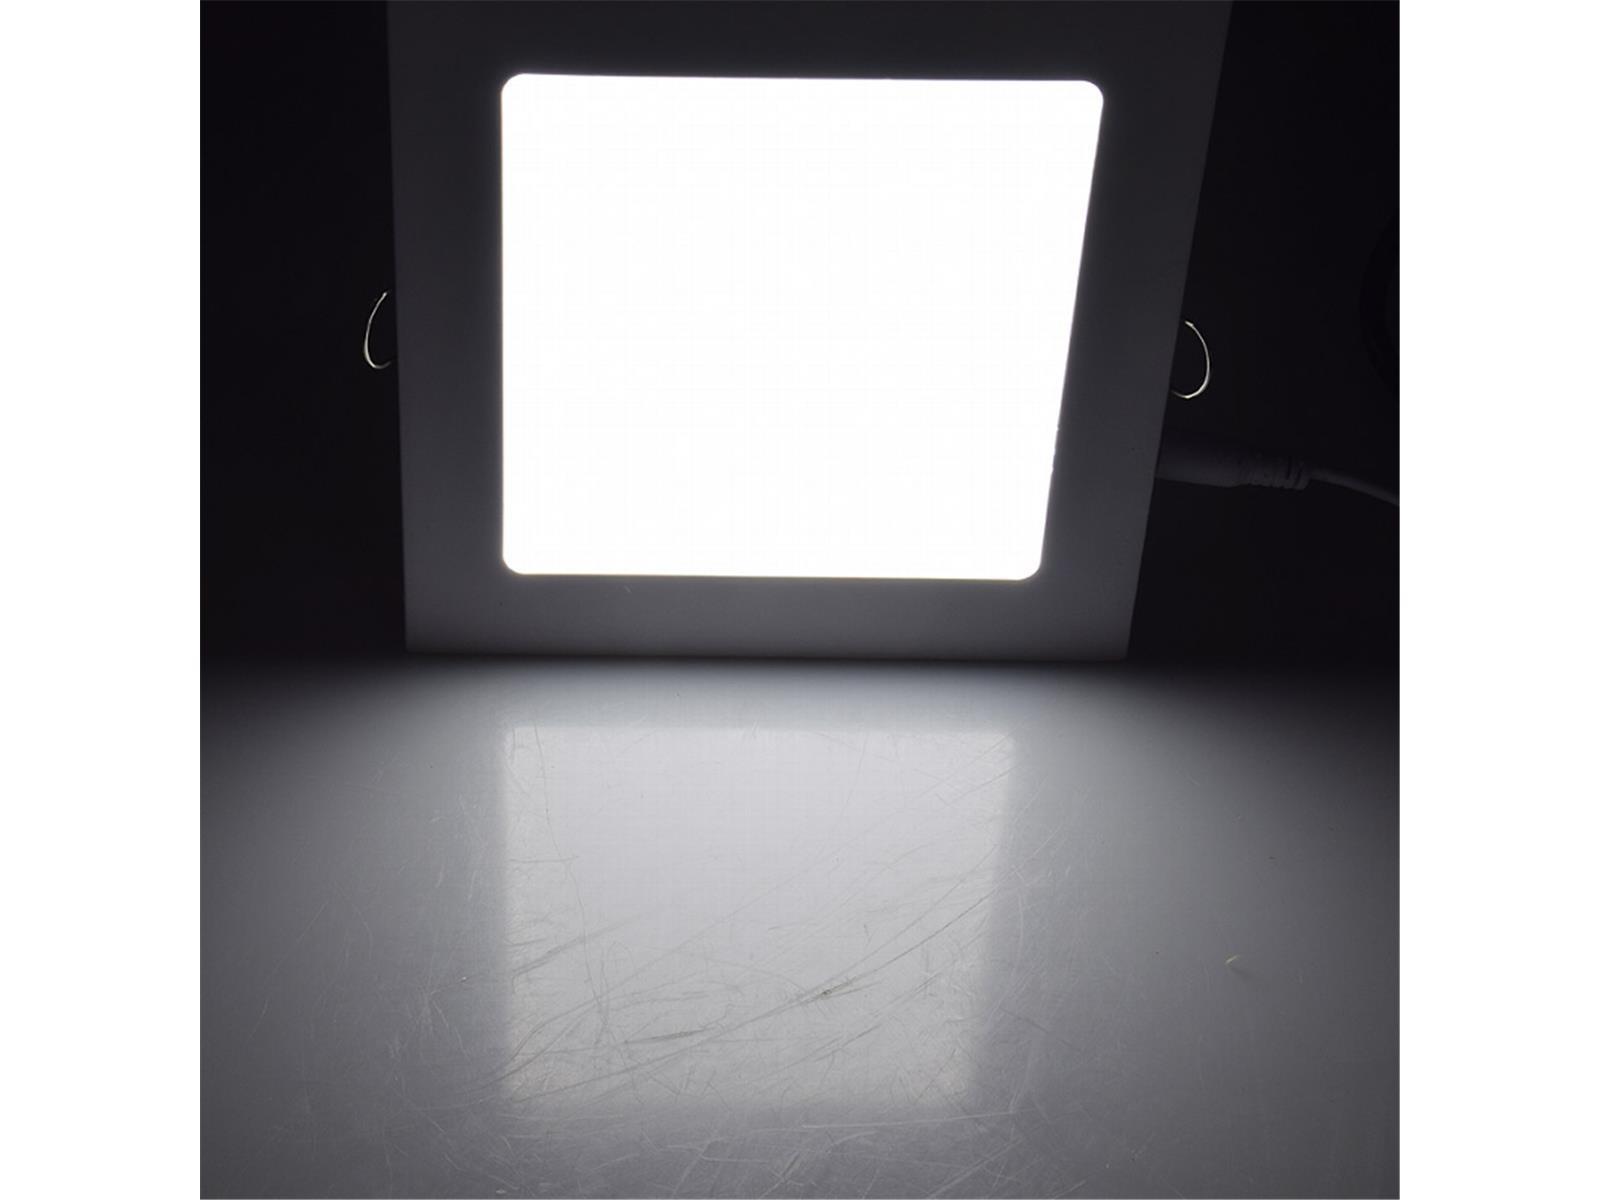 LED Licht-Panel "QCP-17Q", 17x17cm230V, 12W, 870 Lumen,4200K / neutralweiß